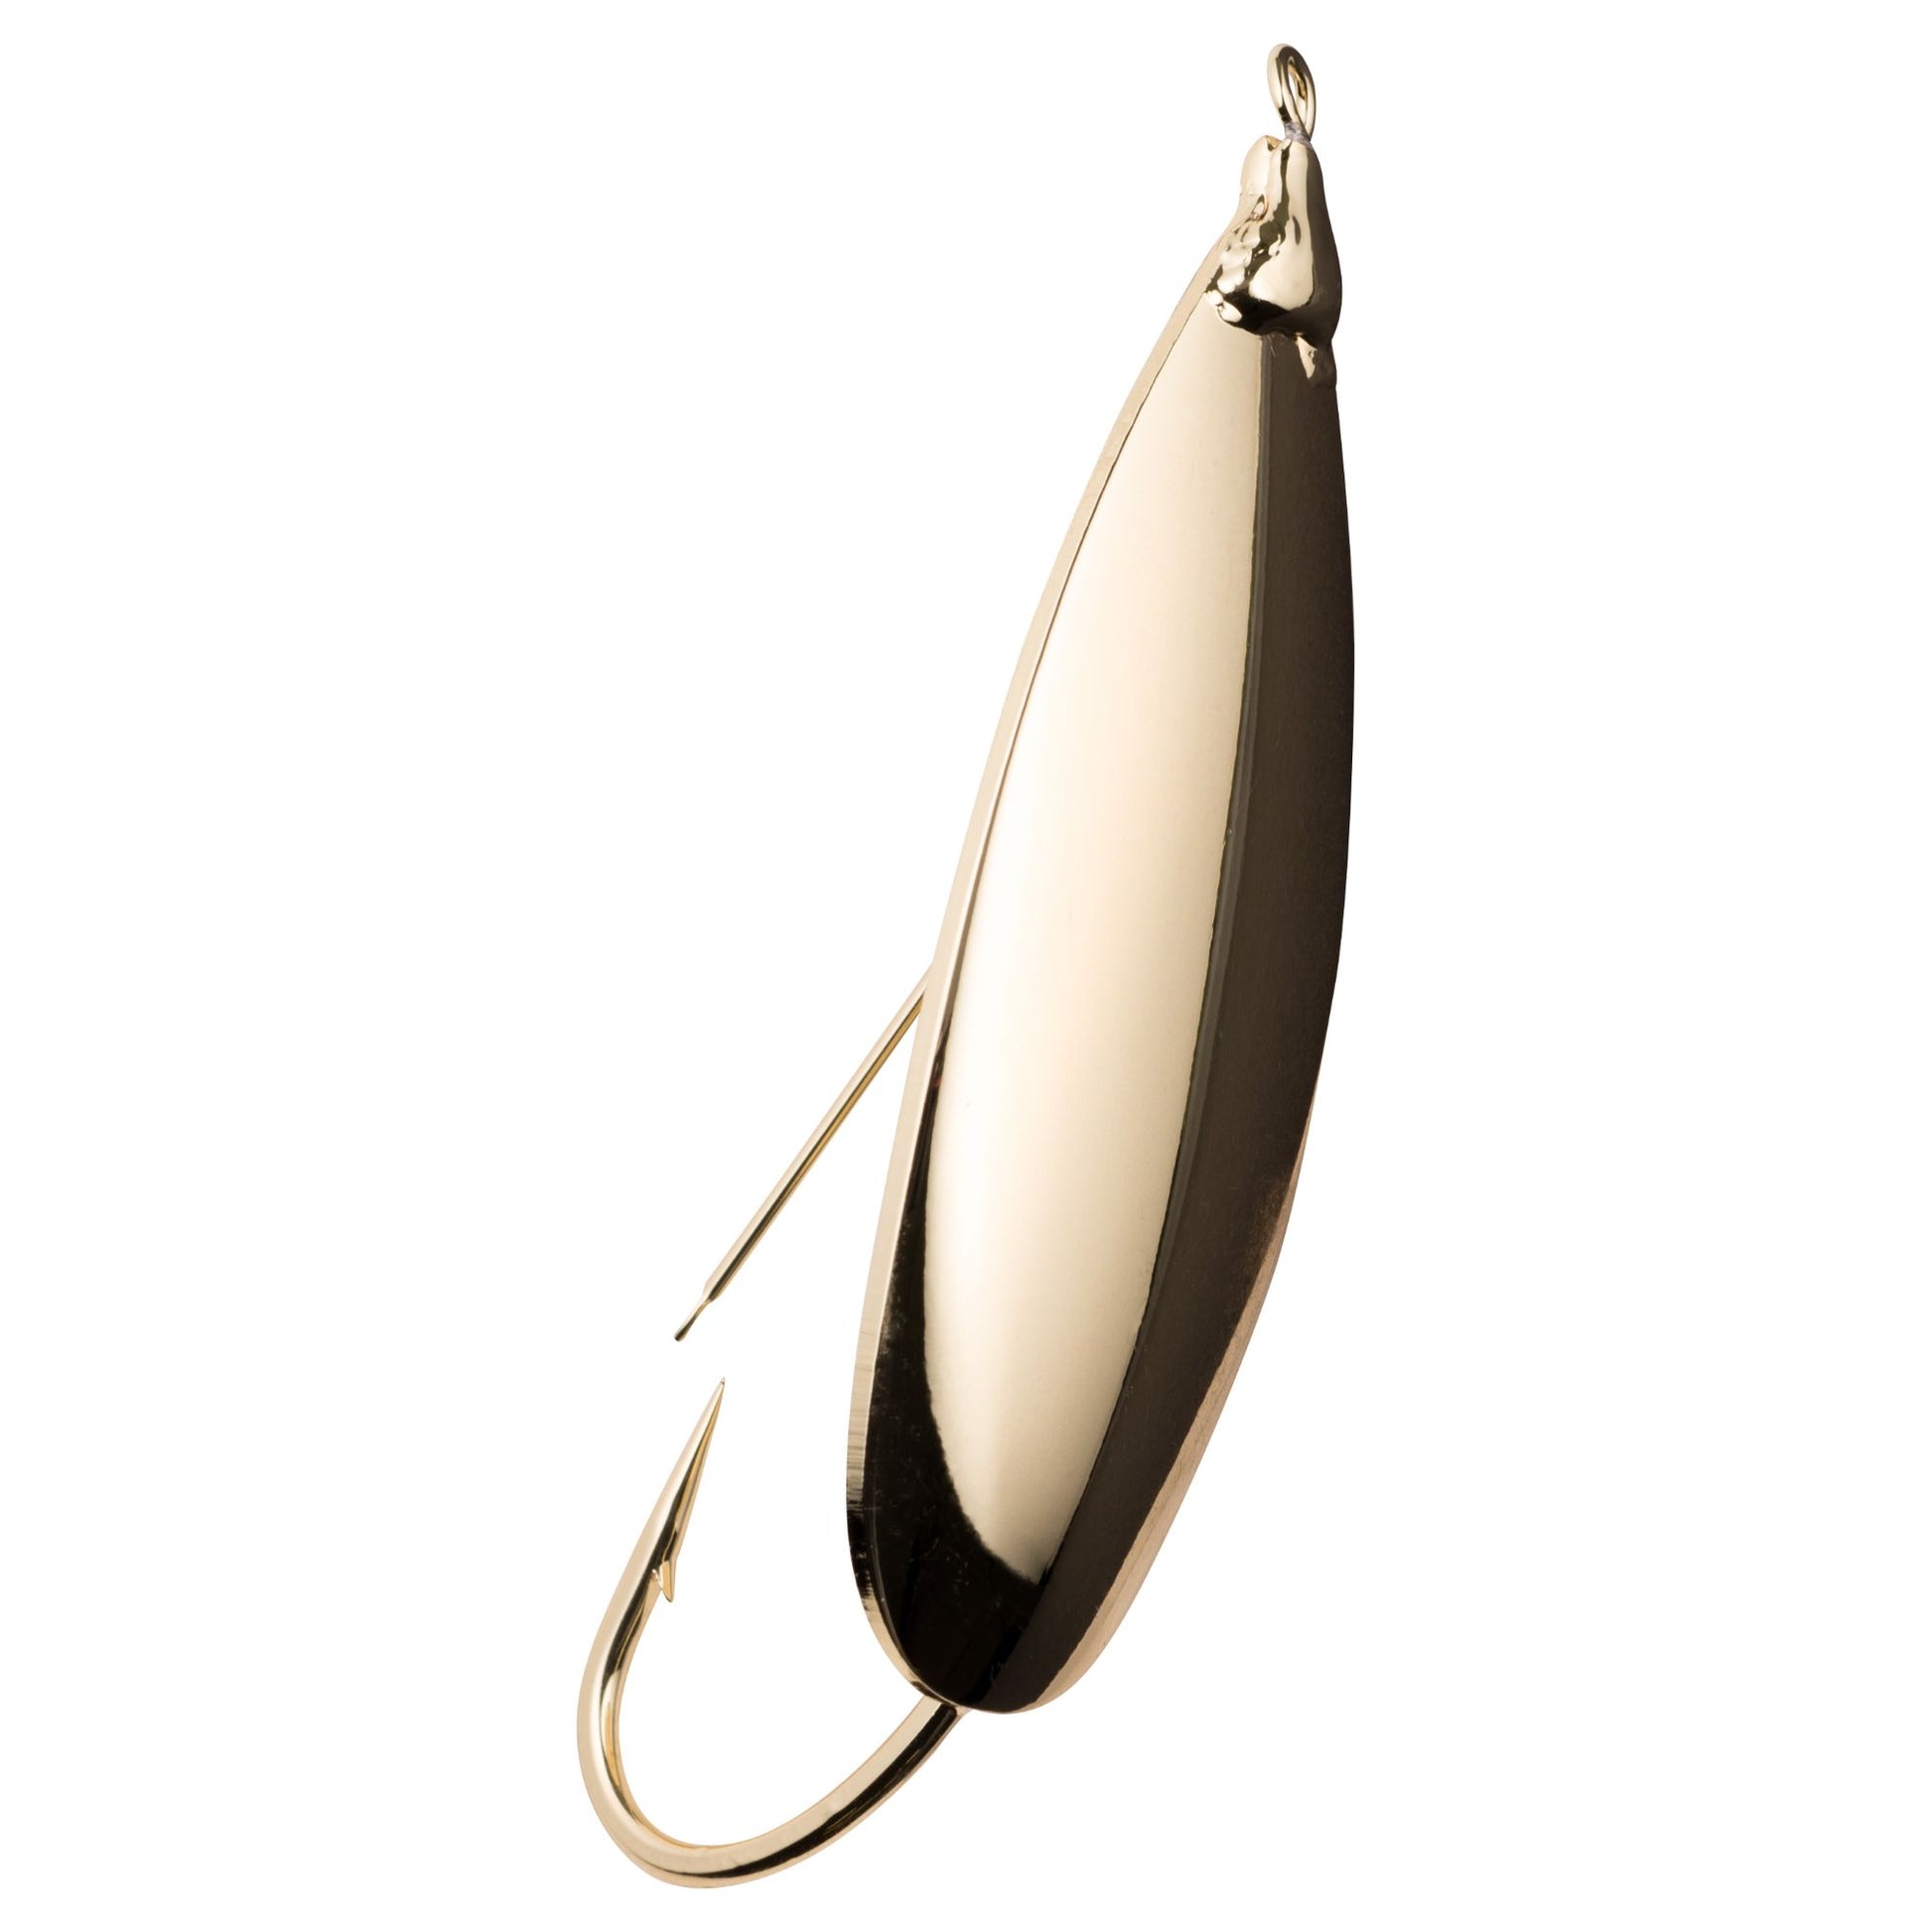 Johnson Silver Minnow (1950s) №1110, 1/4oz silver fishing spoon #18837